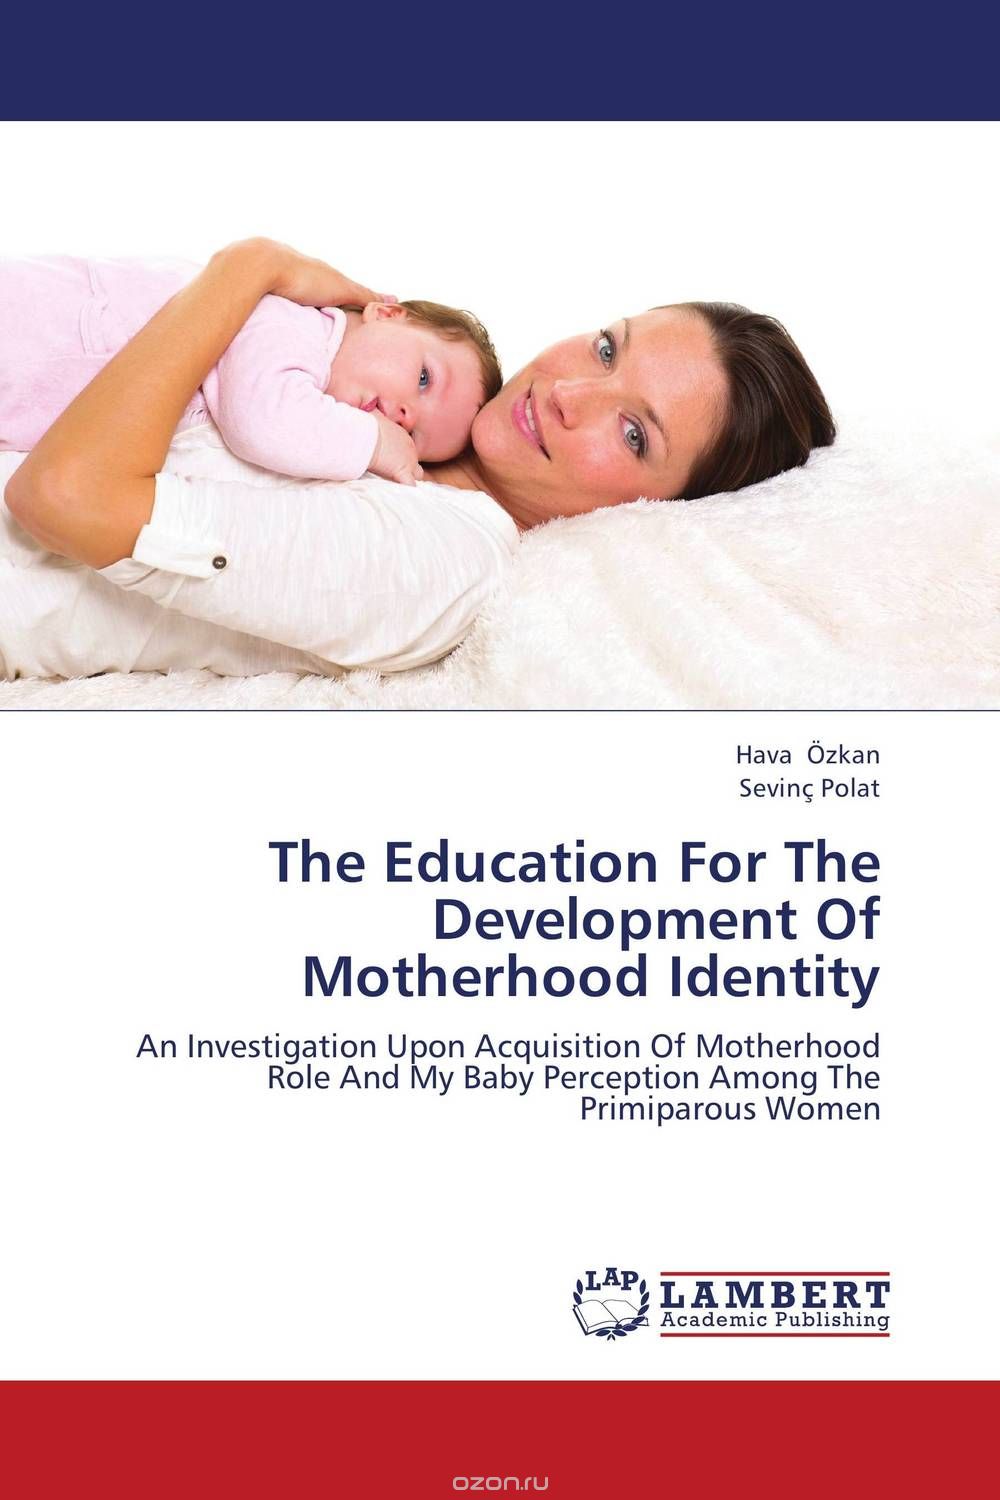 Скачать книгу "The Education For The Development Of Motherhood Identity"